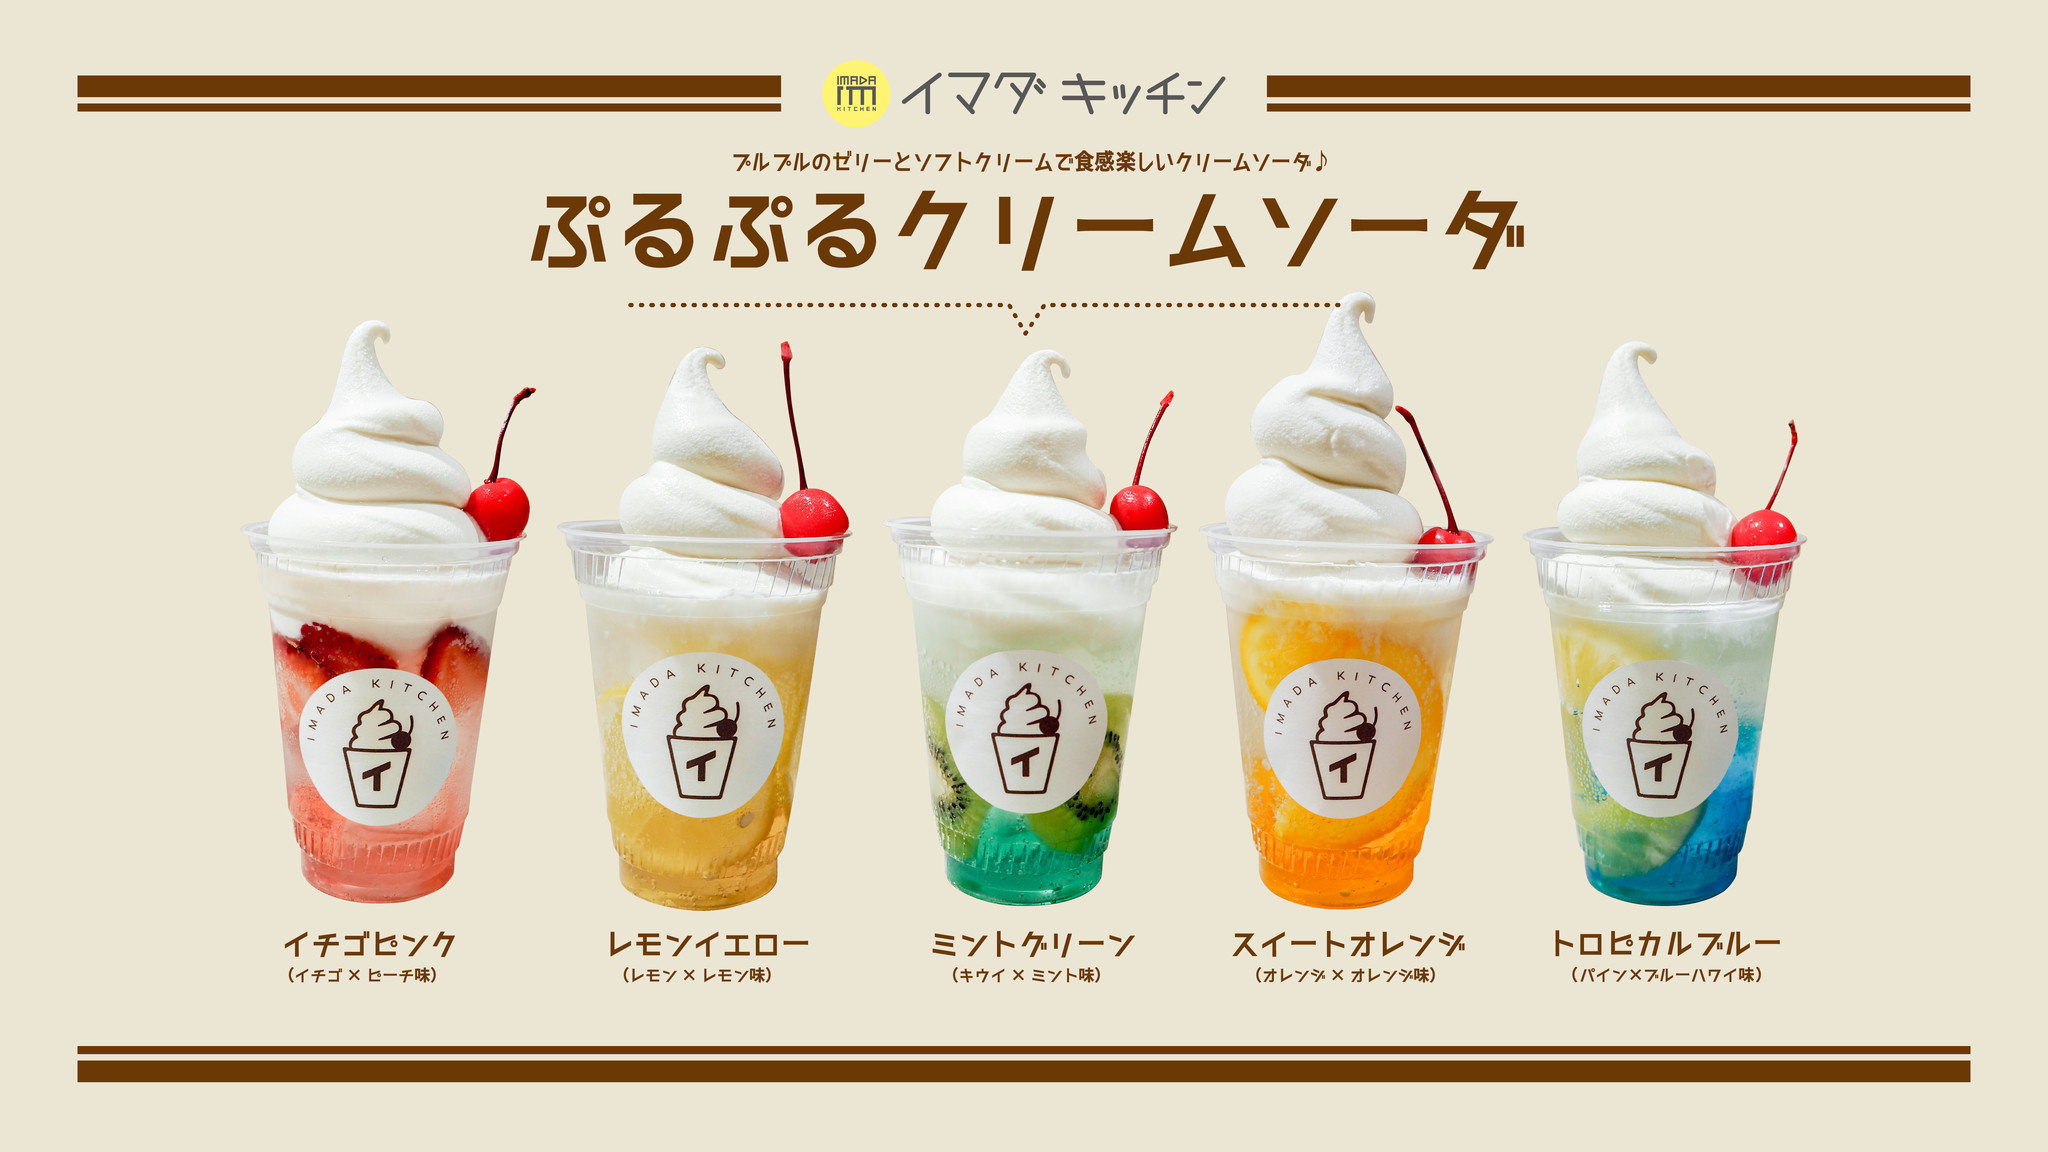 Shibuya109渋谷店 Imada Kitchen に新メニュー登場 ぷるぷる新食感のレトロ可愛いクリームソーダ 株式会社エスエルディーのプレスリリース